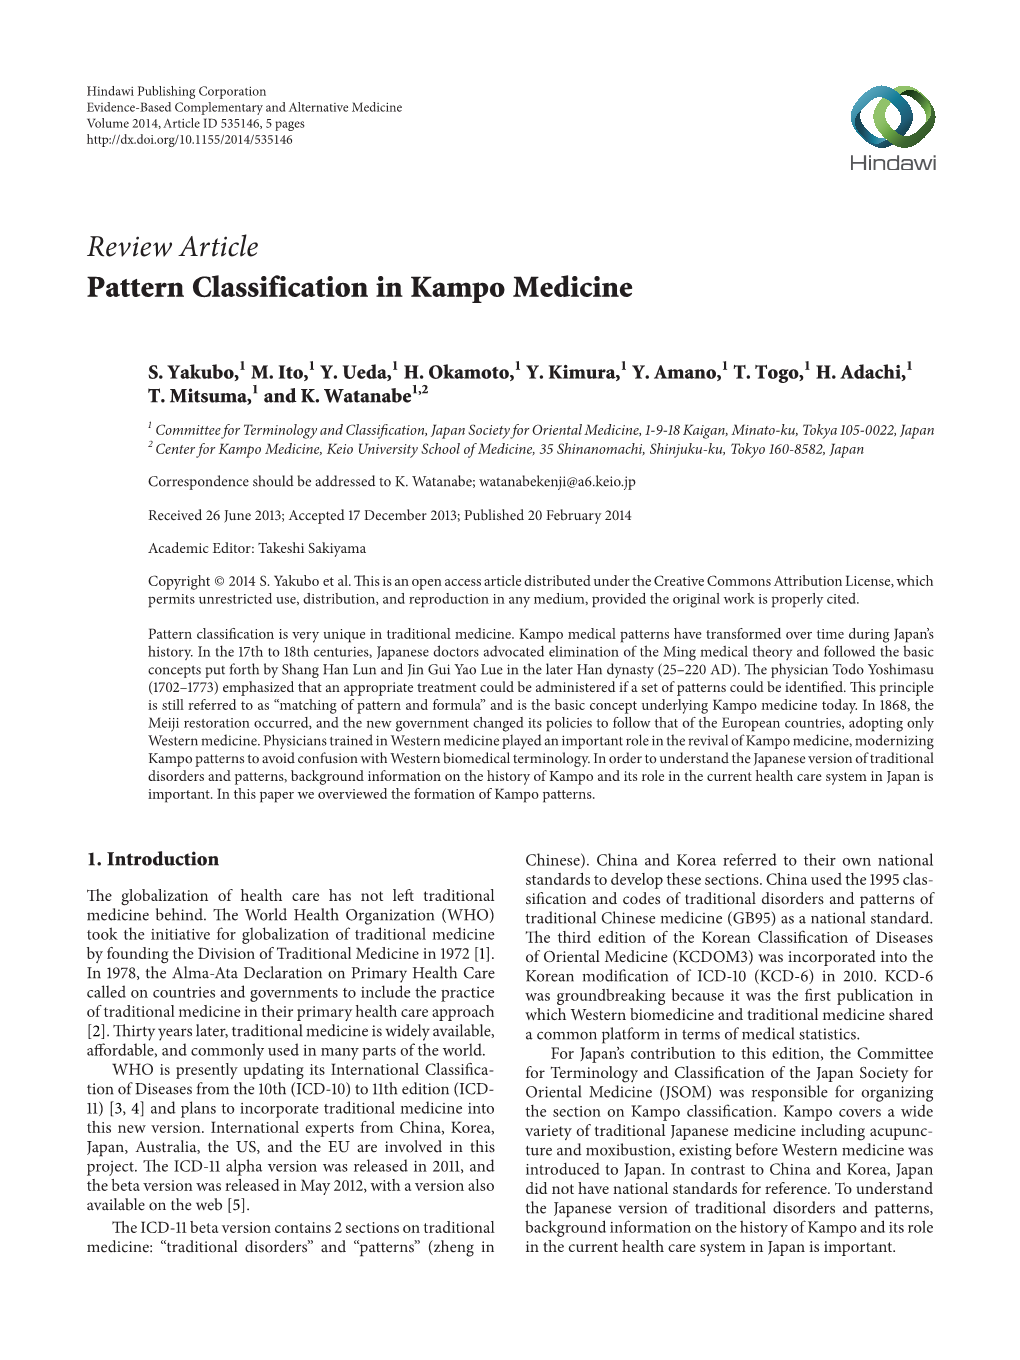 Pattern Classification in Kampo Medicine